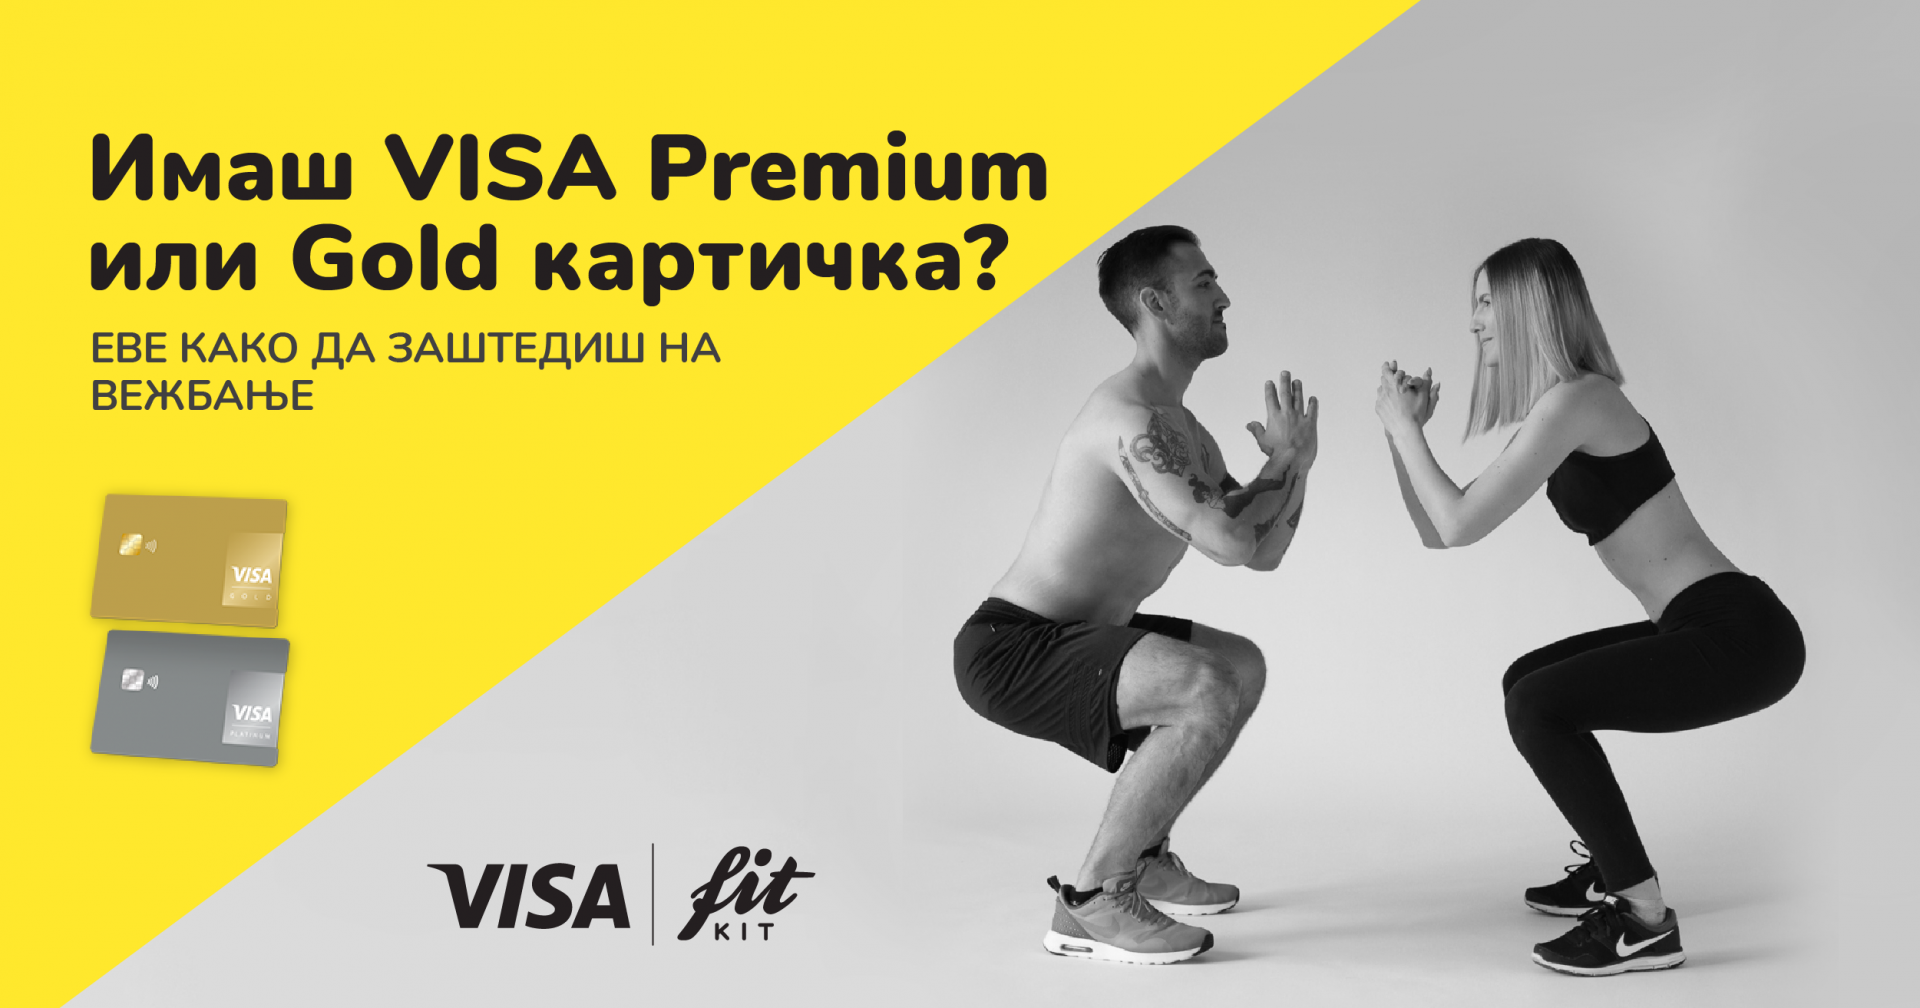 visa-fit-kit